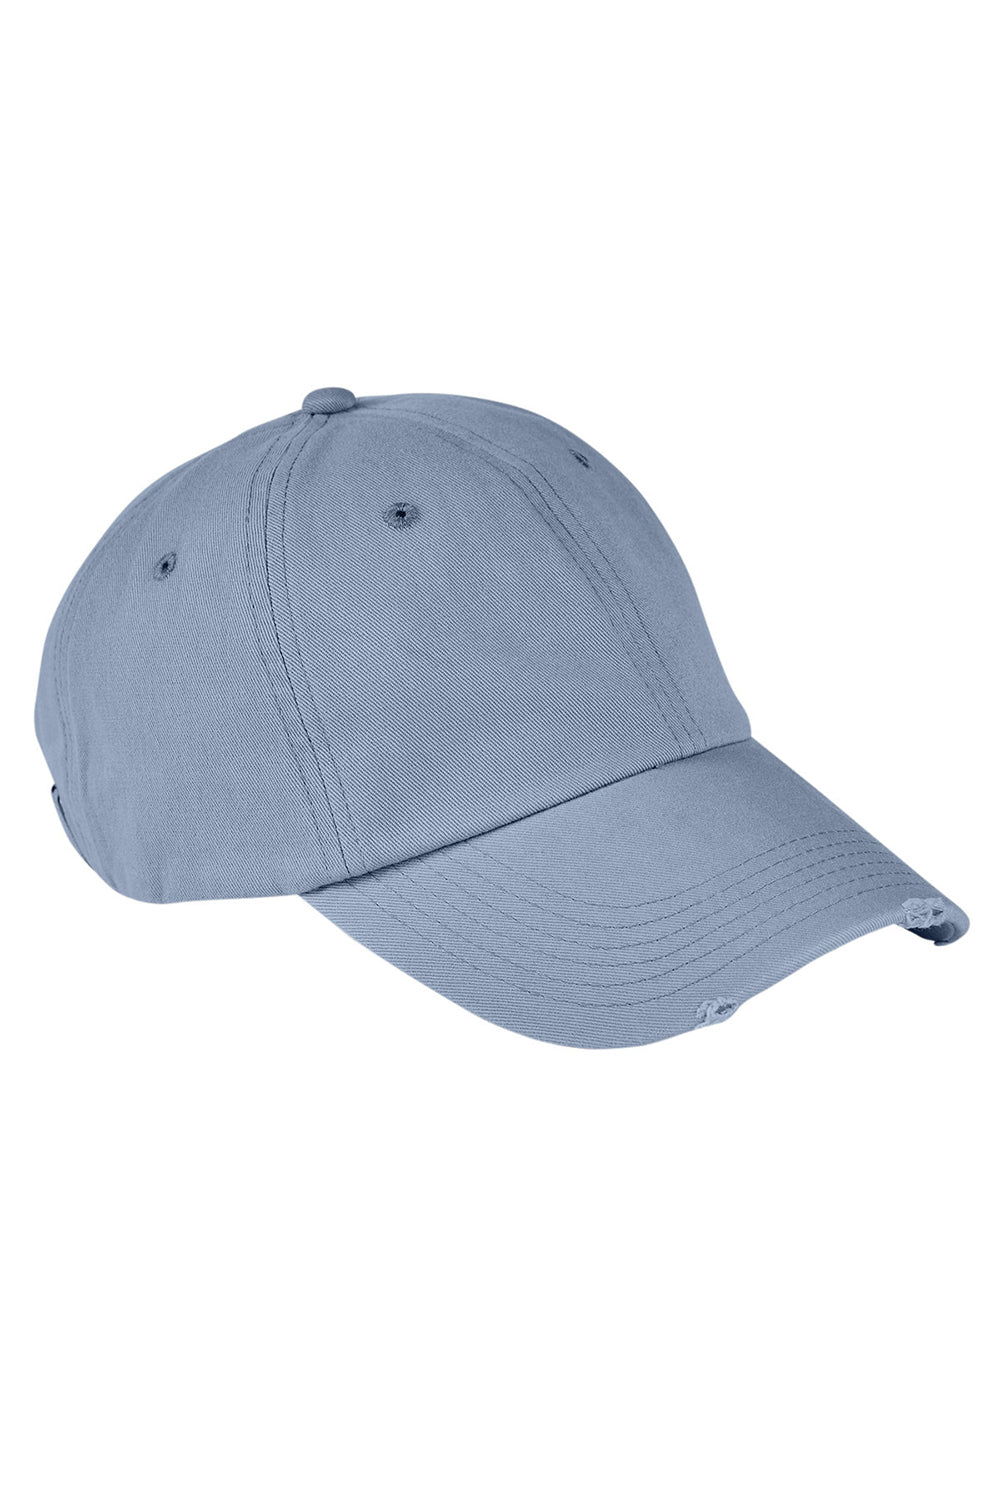 Authentic Pigment AP1920 Mens Distressed Adjustable Hat Niagara Blue Model Flat Front